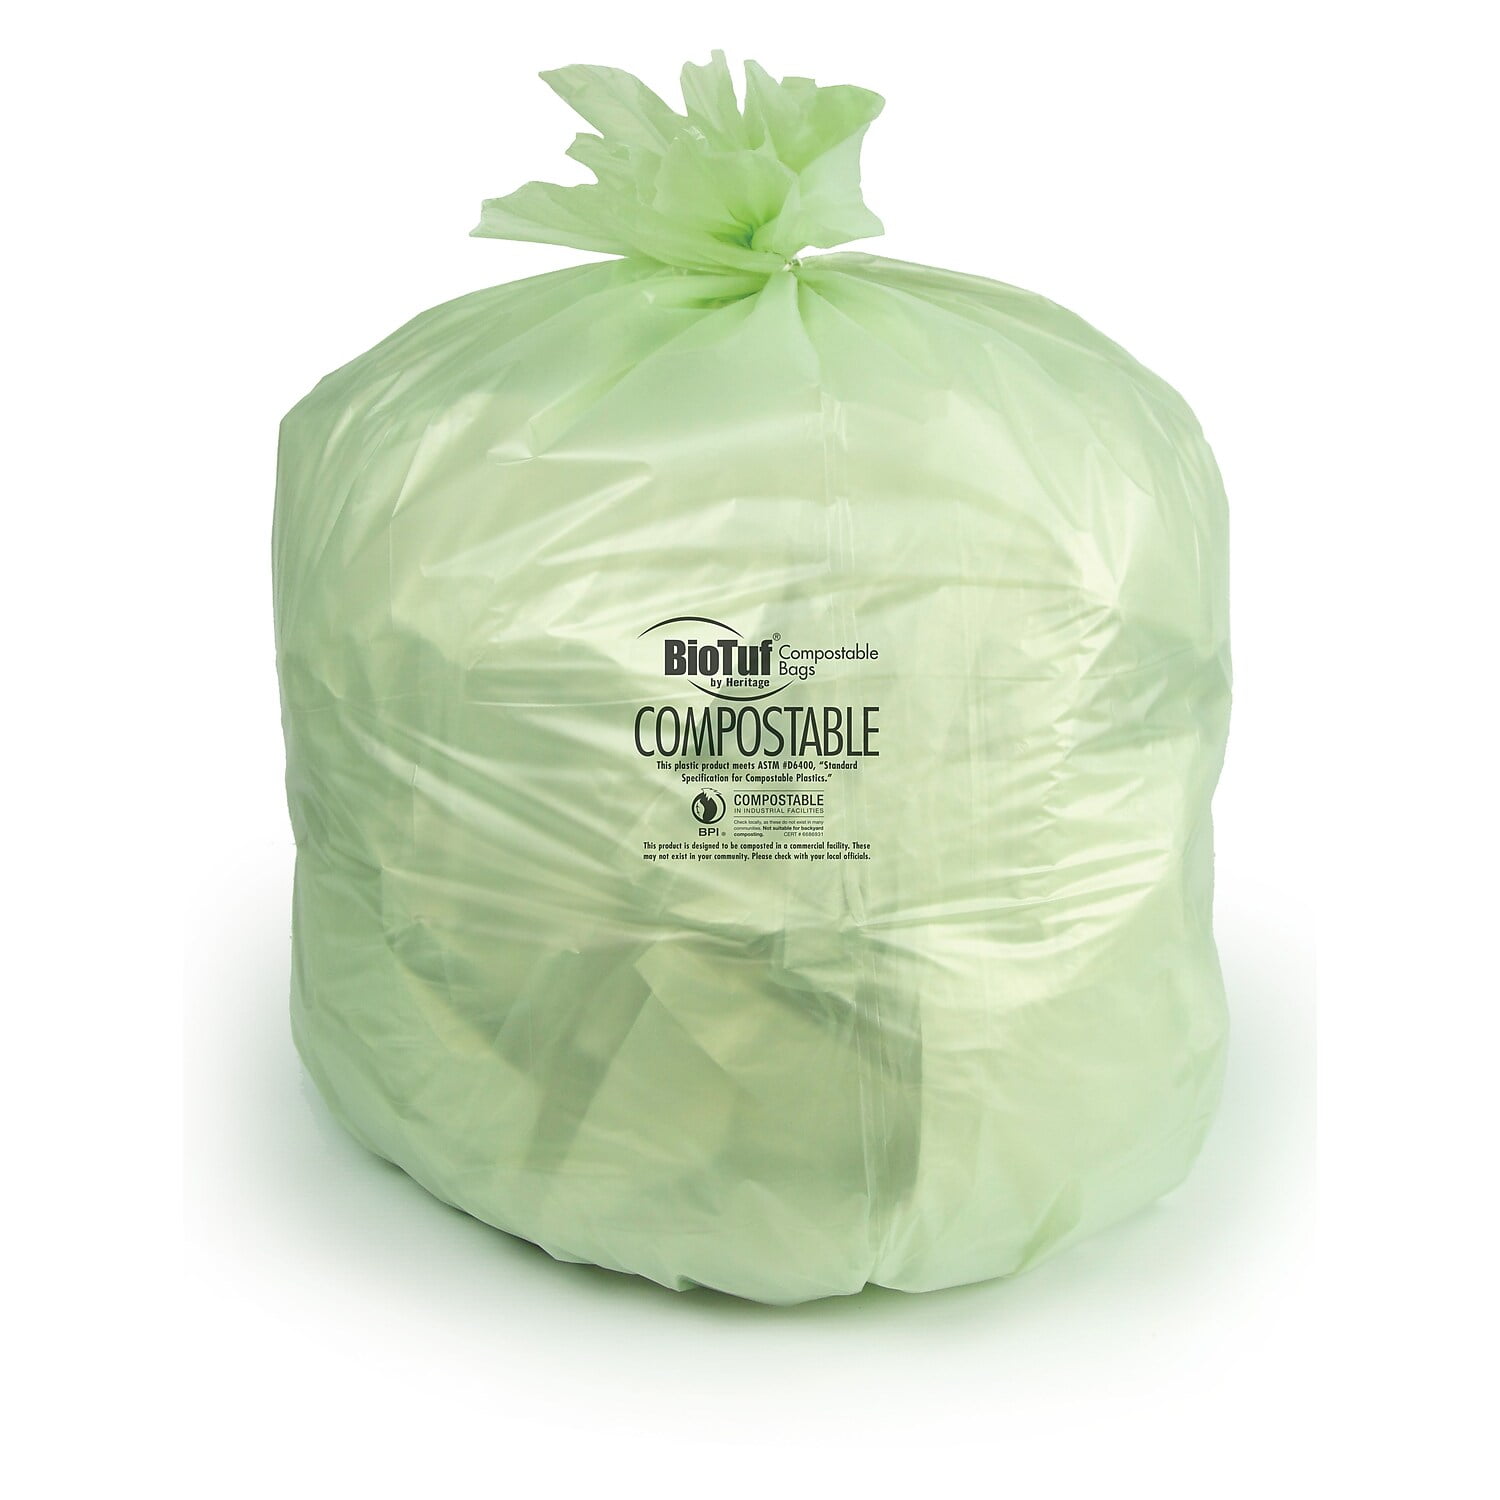 2Pcs Collapsible Trash Can 37.8L/10 Gallon Non-Woven Fabric Pop-Up Trash Bag  Foldable